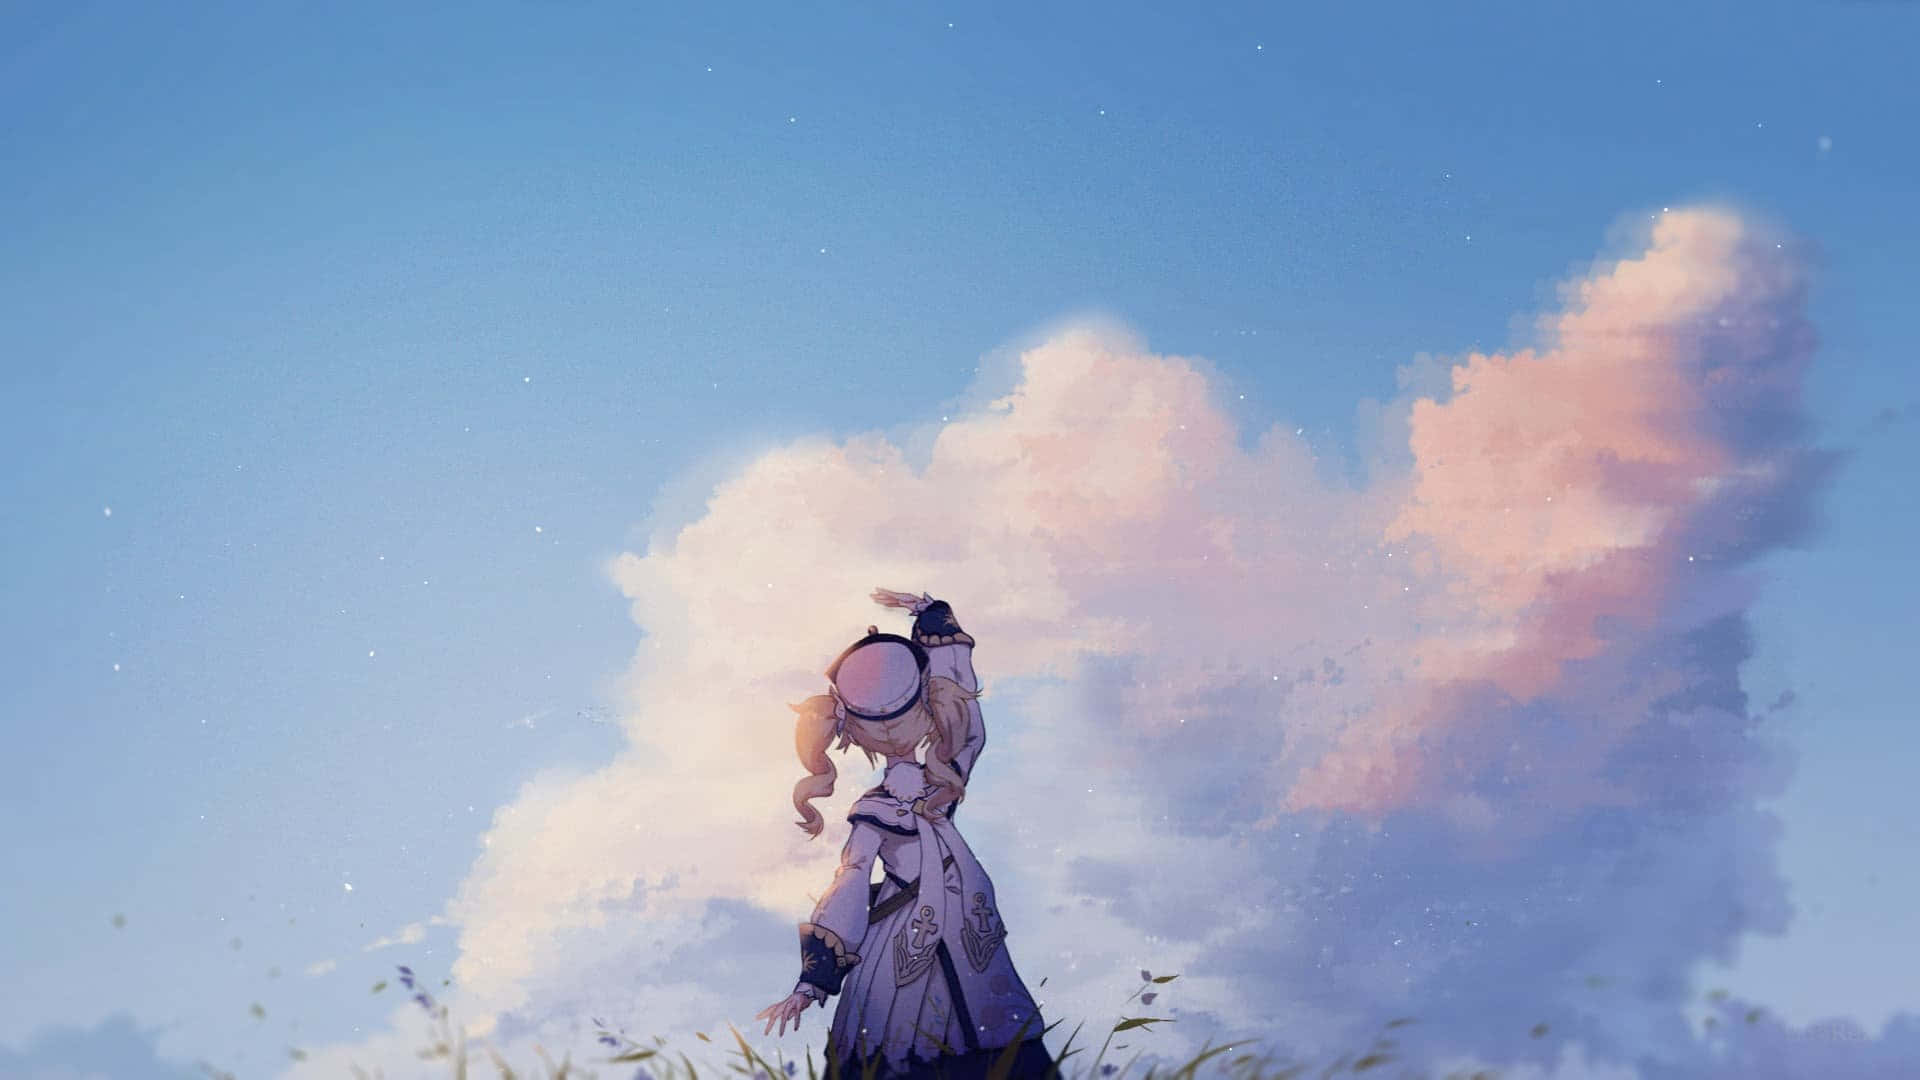 Genshin Character Gazing At Clouds.jpg Wallpaper